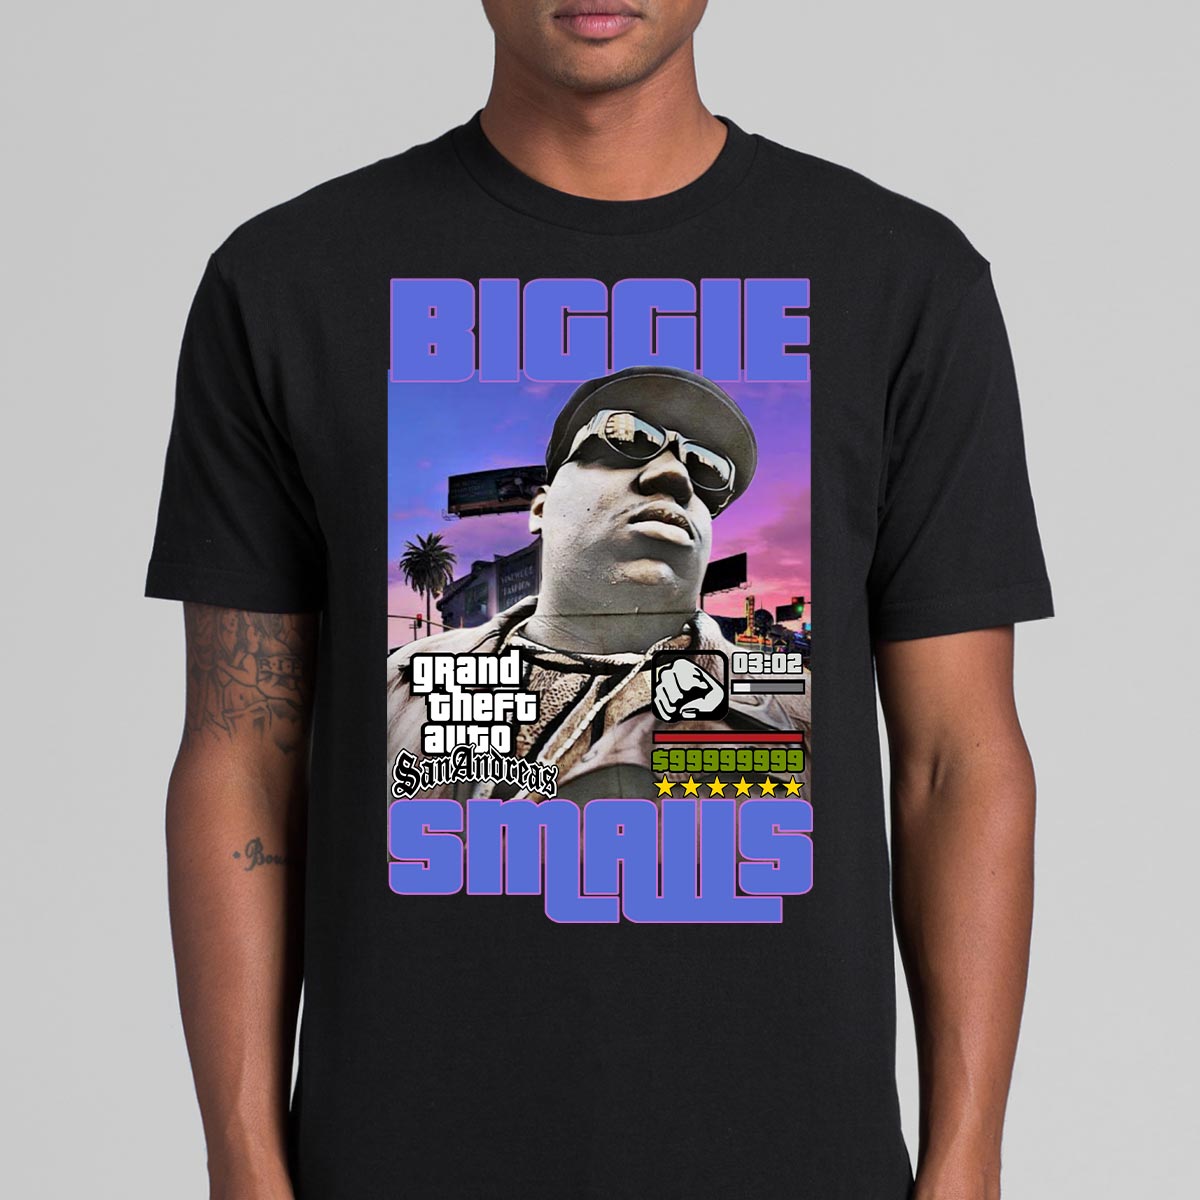 The Notorious B.I.G. Biggie Smalls T-Shirt Rapper Family Fan Music Hip Hop Culture